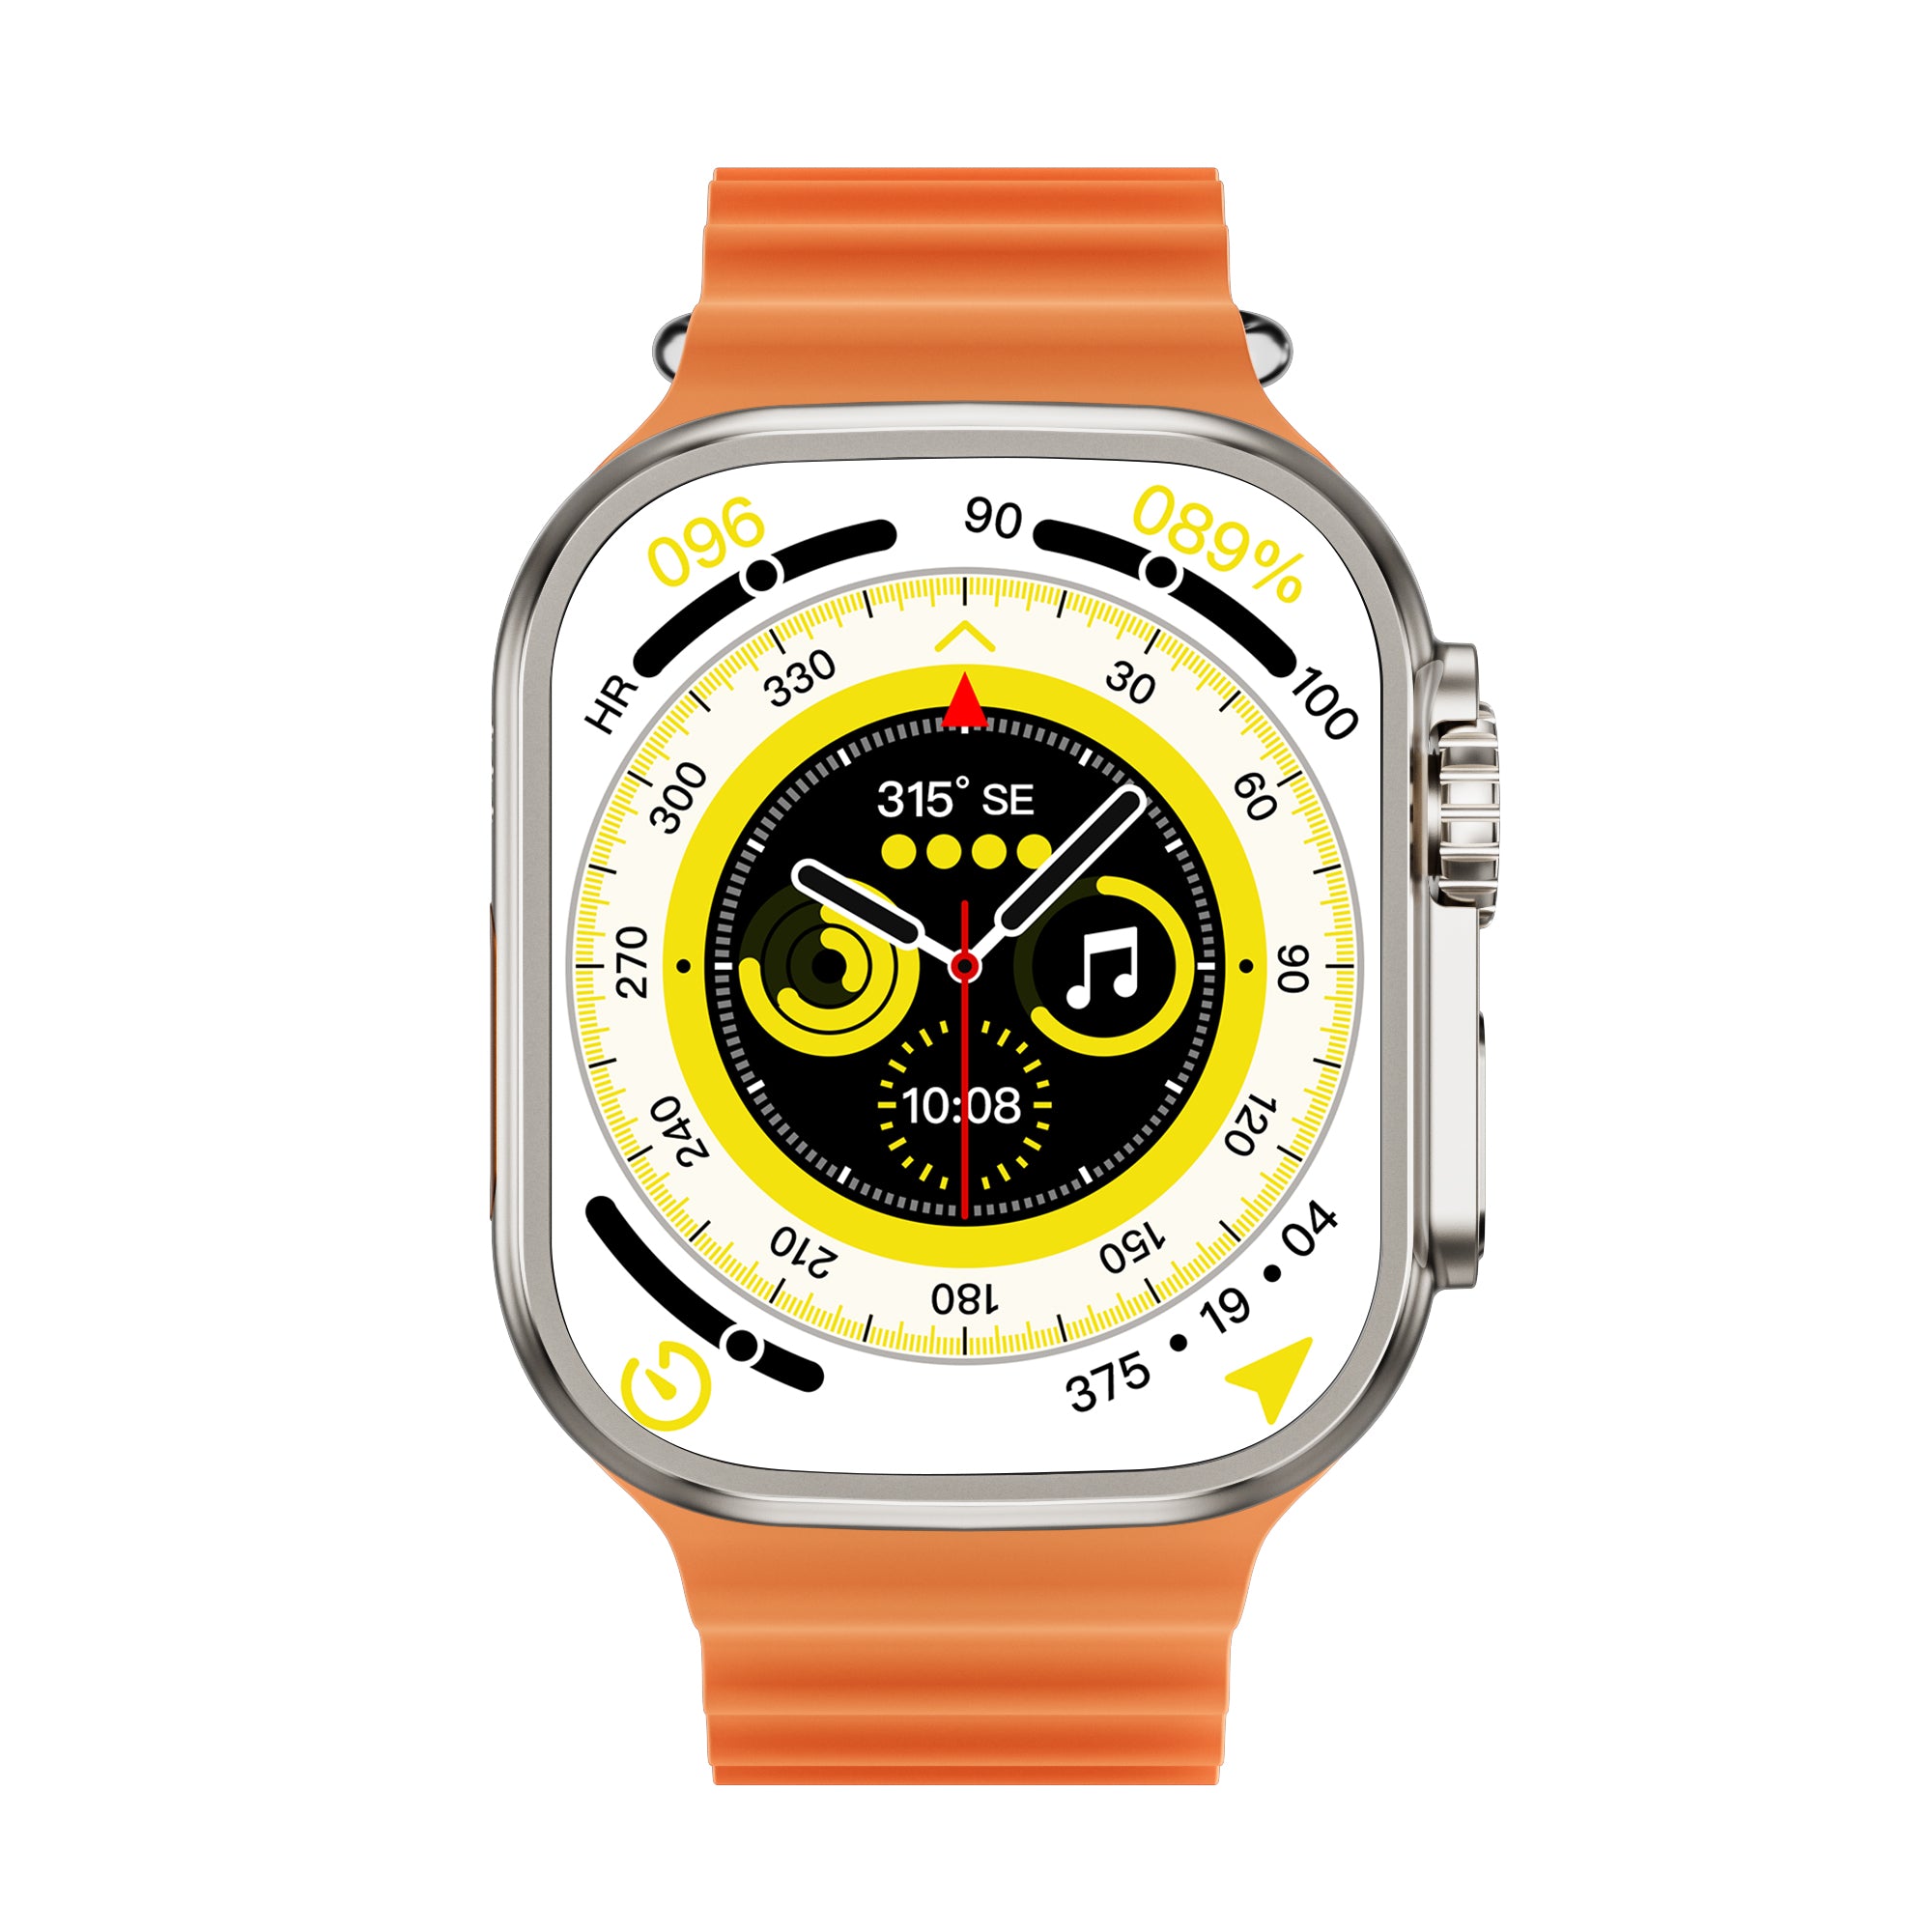 BlackZone GURU Smartwatch with multiple straps available